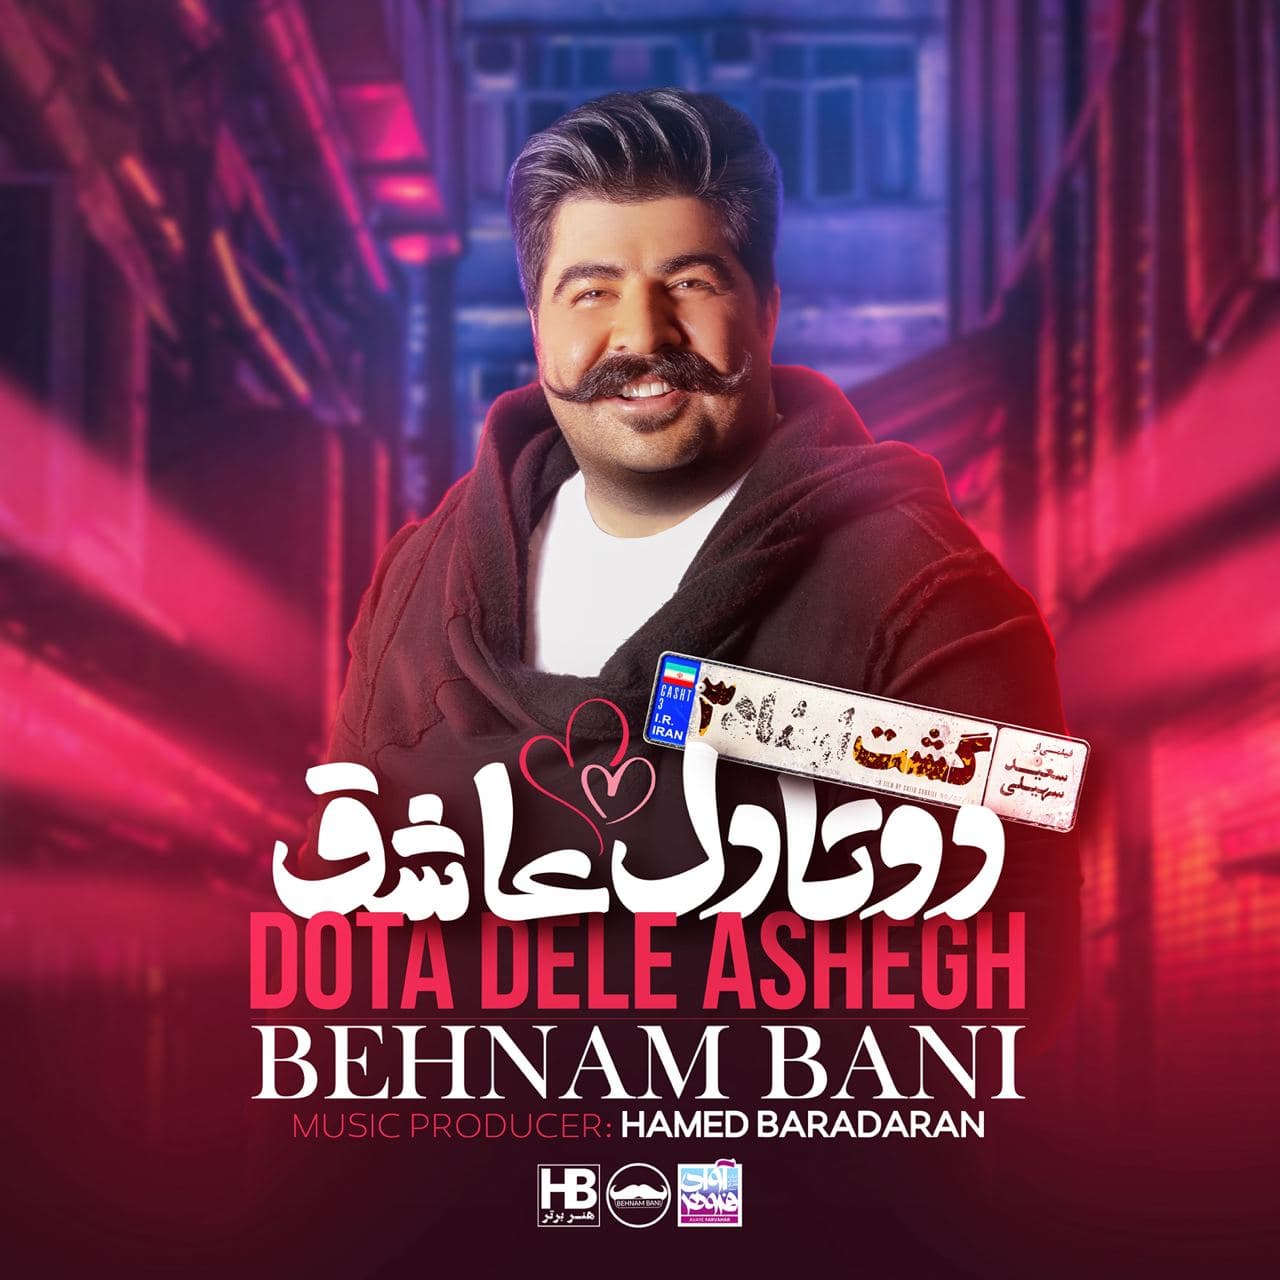 Behnam Bani - Dota Dele Ashegh